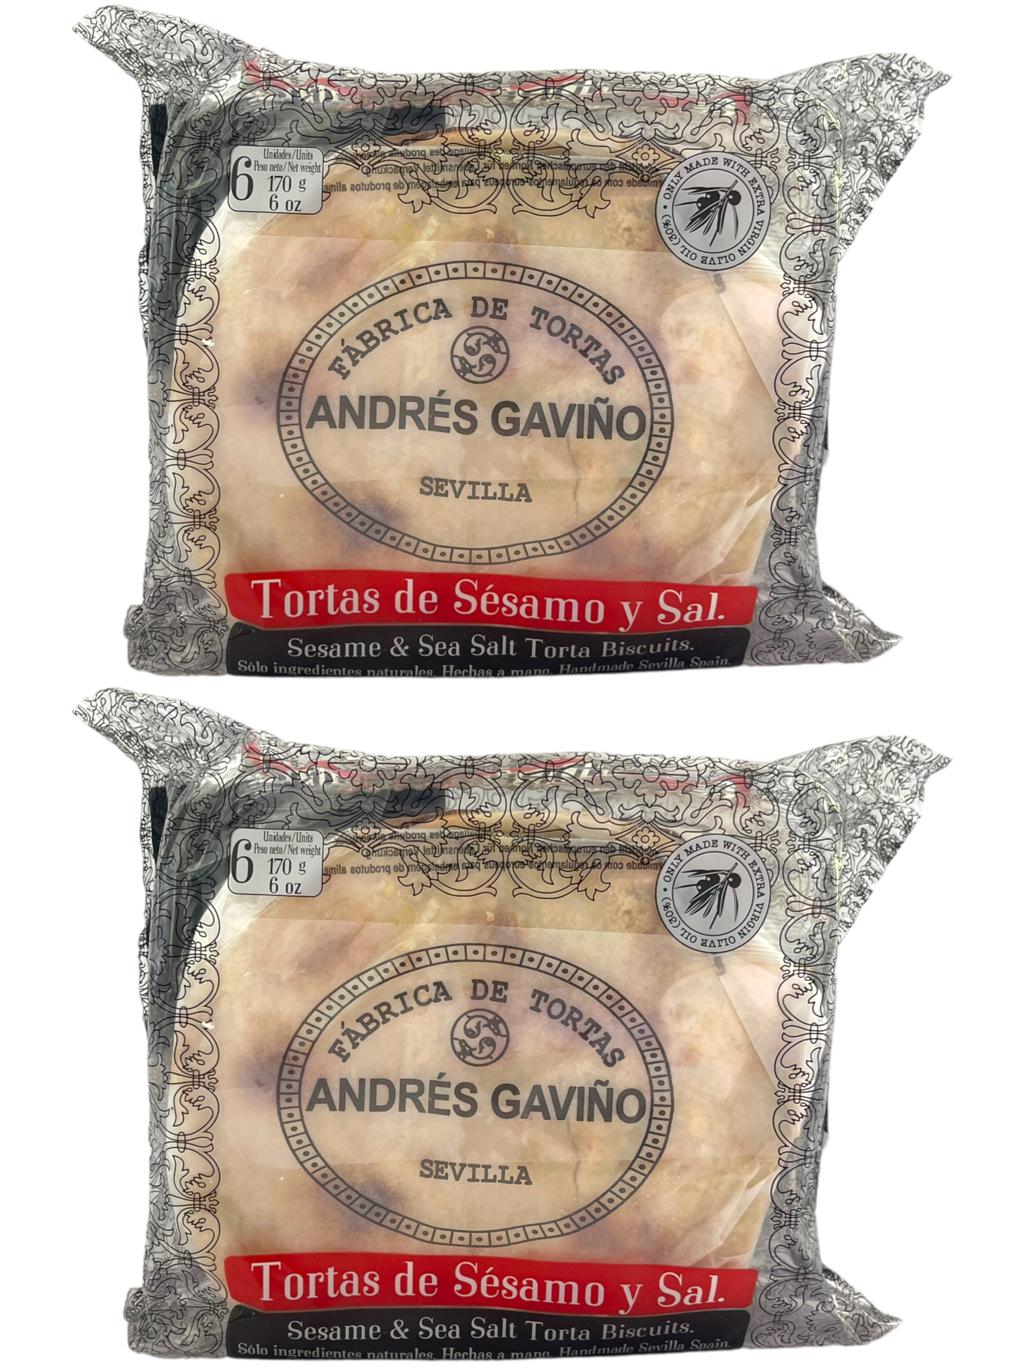 Andres Gavino Spanish Sesame and Sea Salt Tortas 170g Twin Pack 340g Total